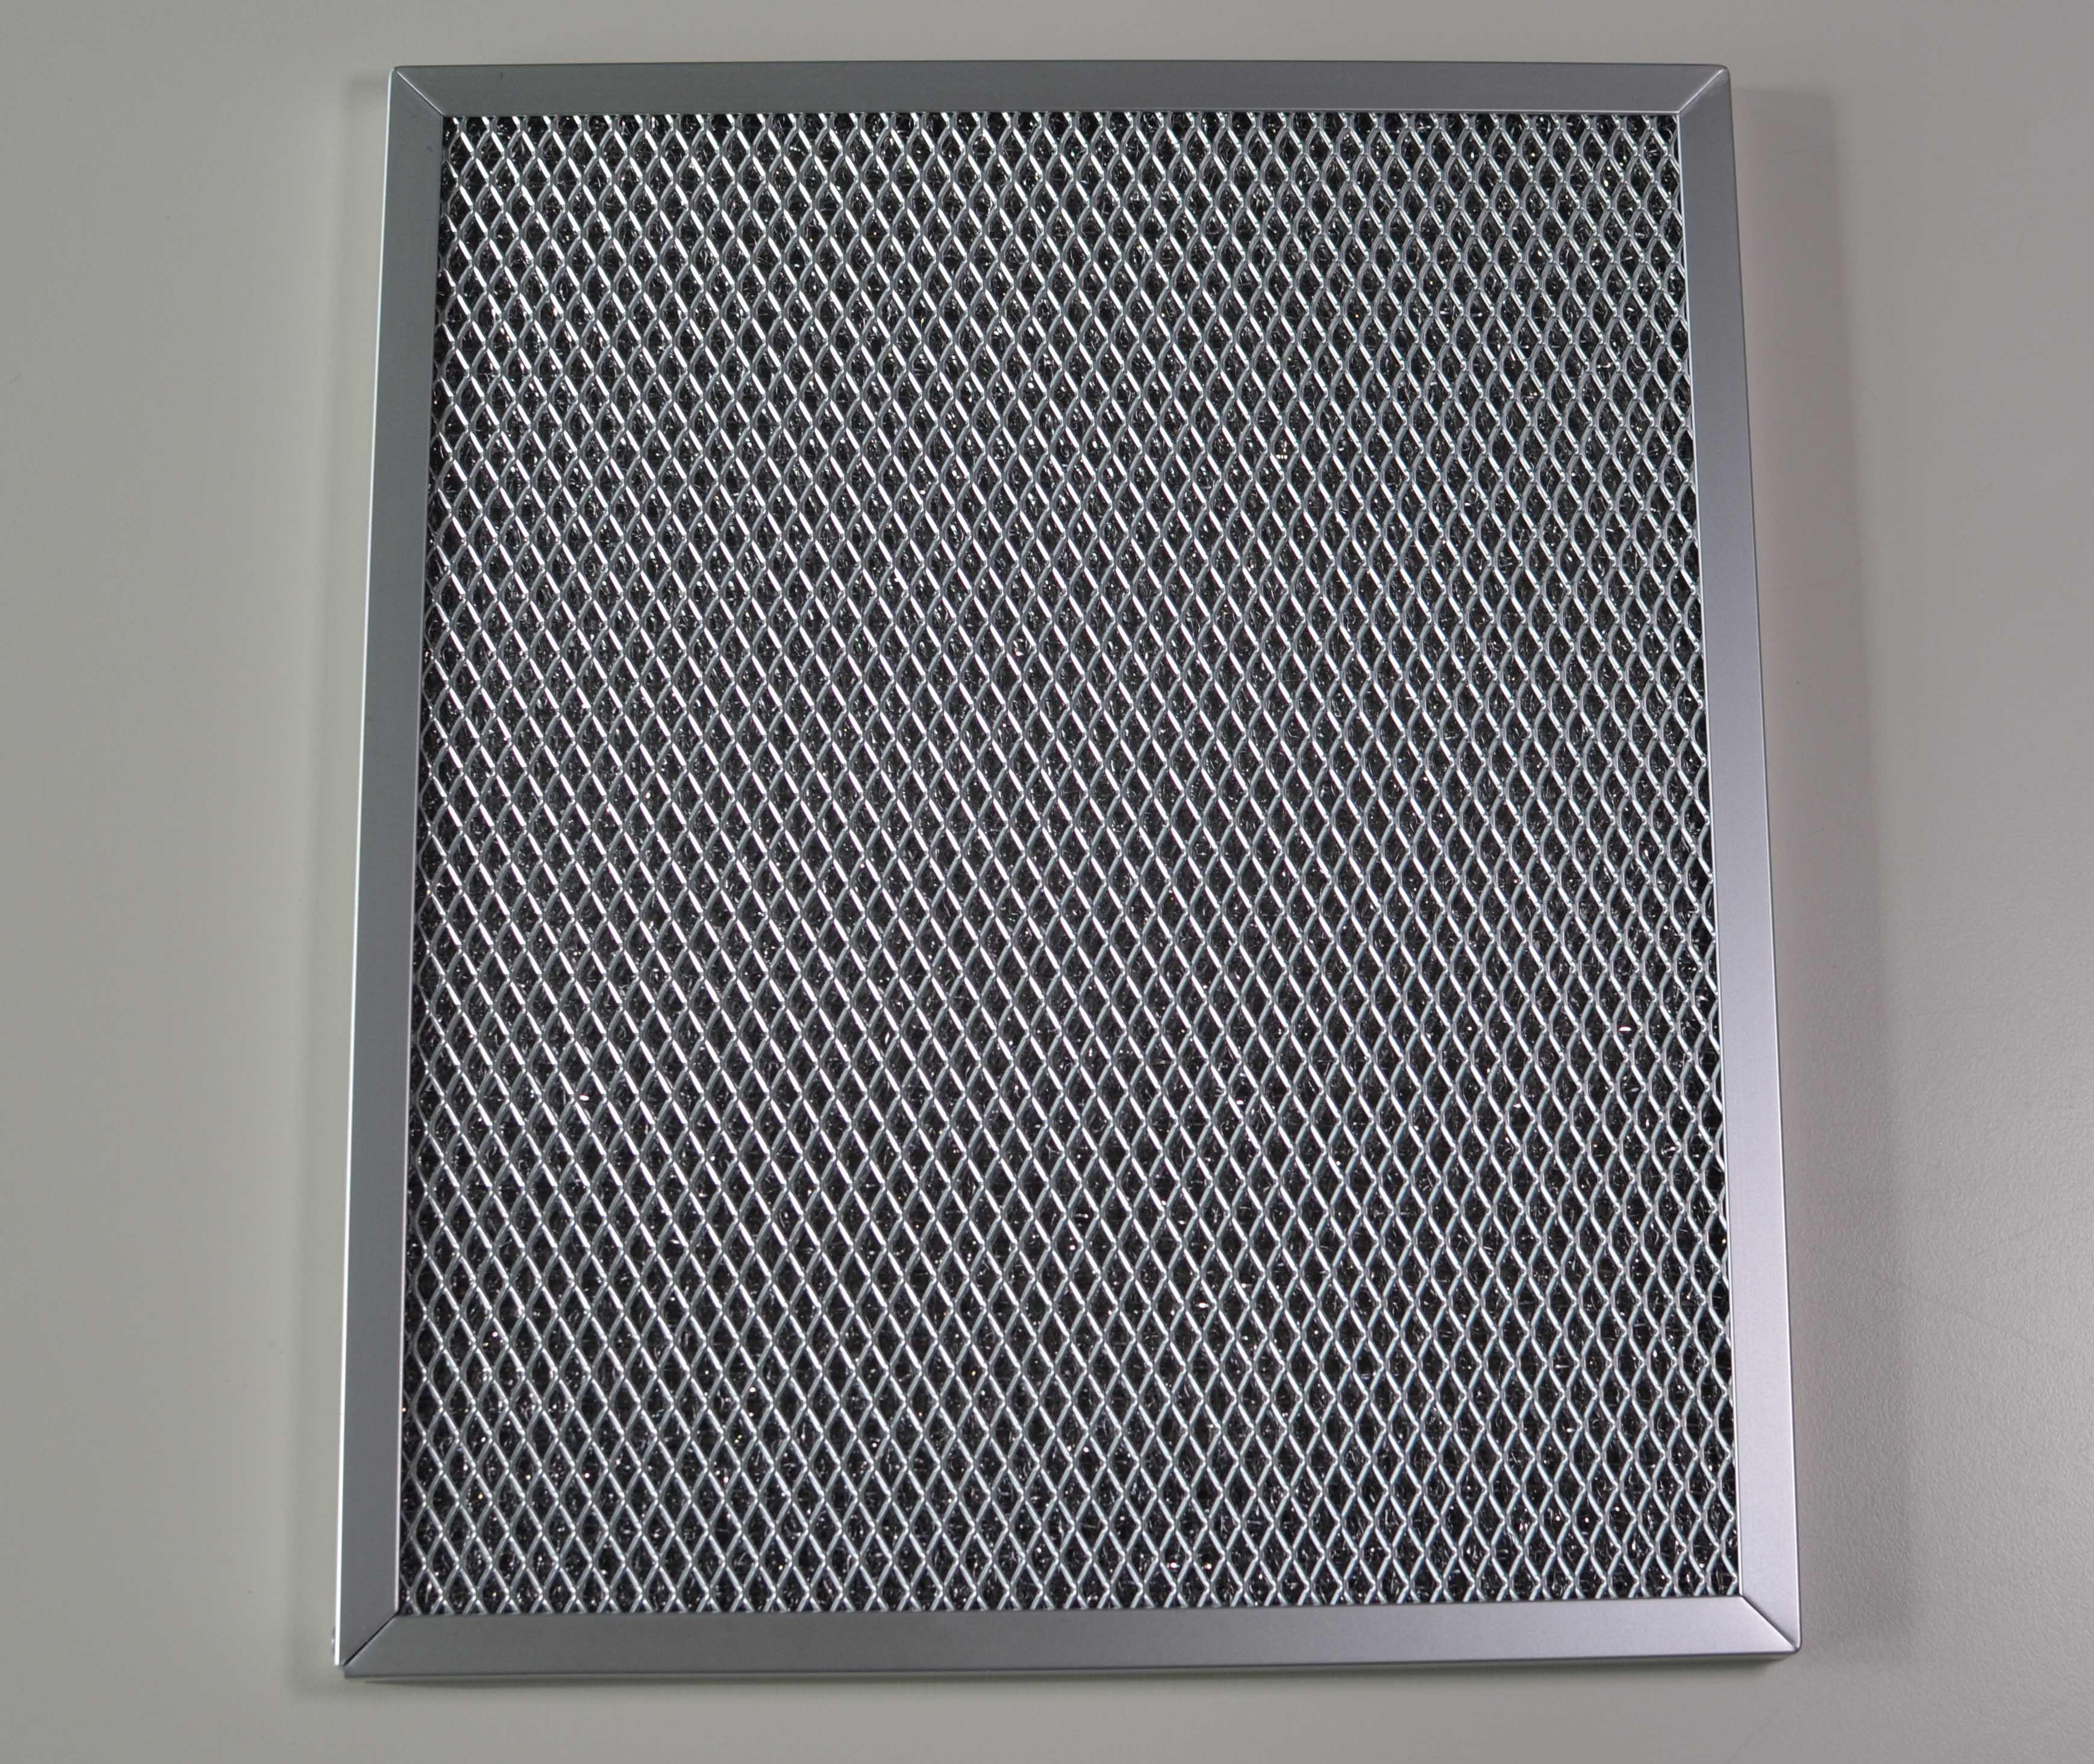 Aluminium filter for cooling units